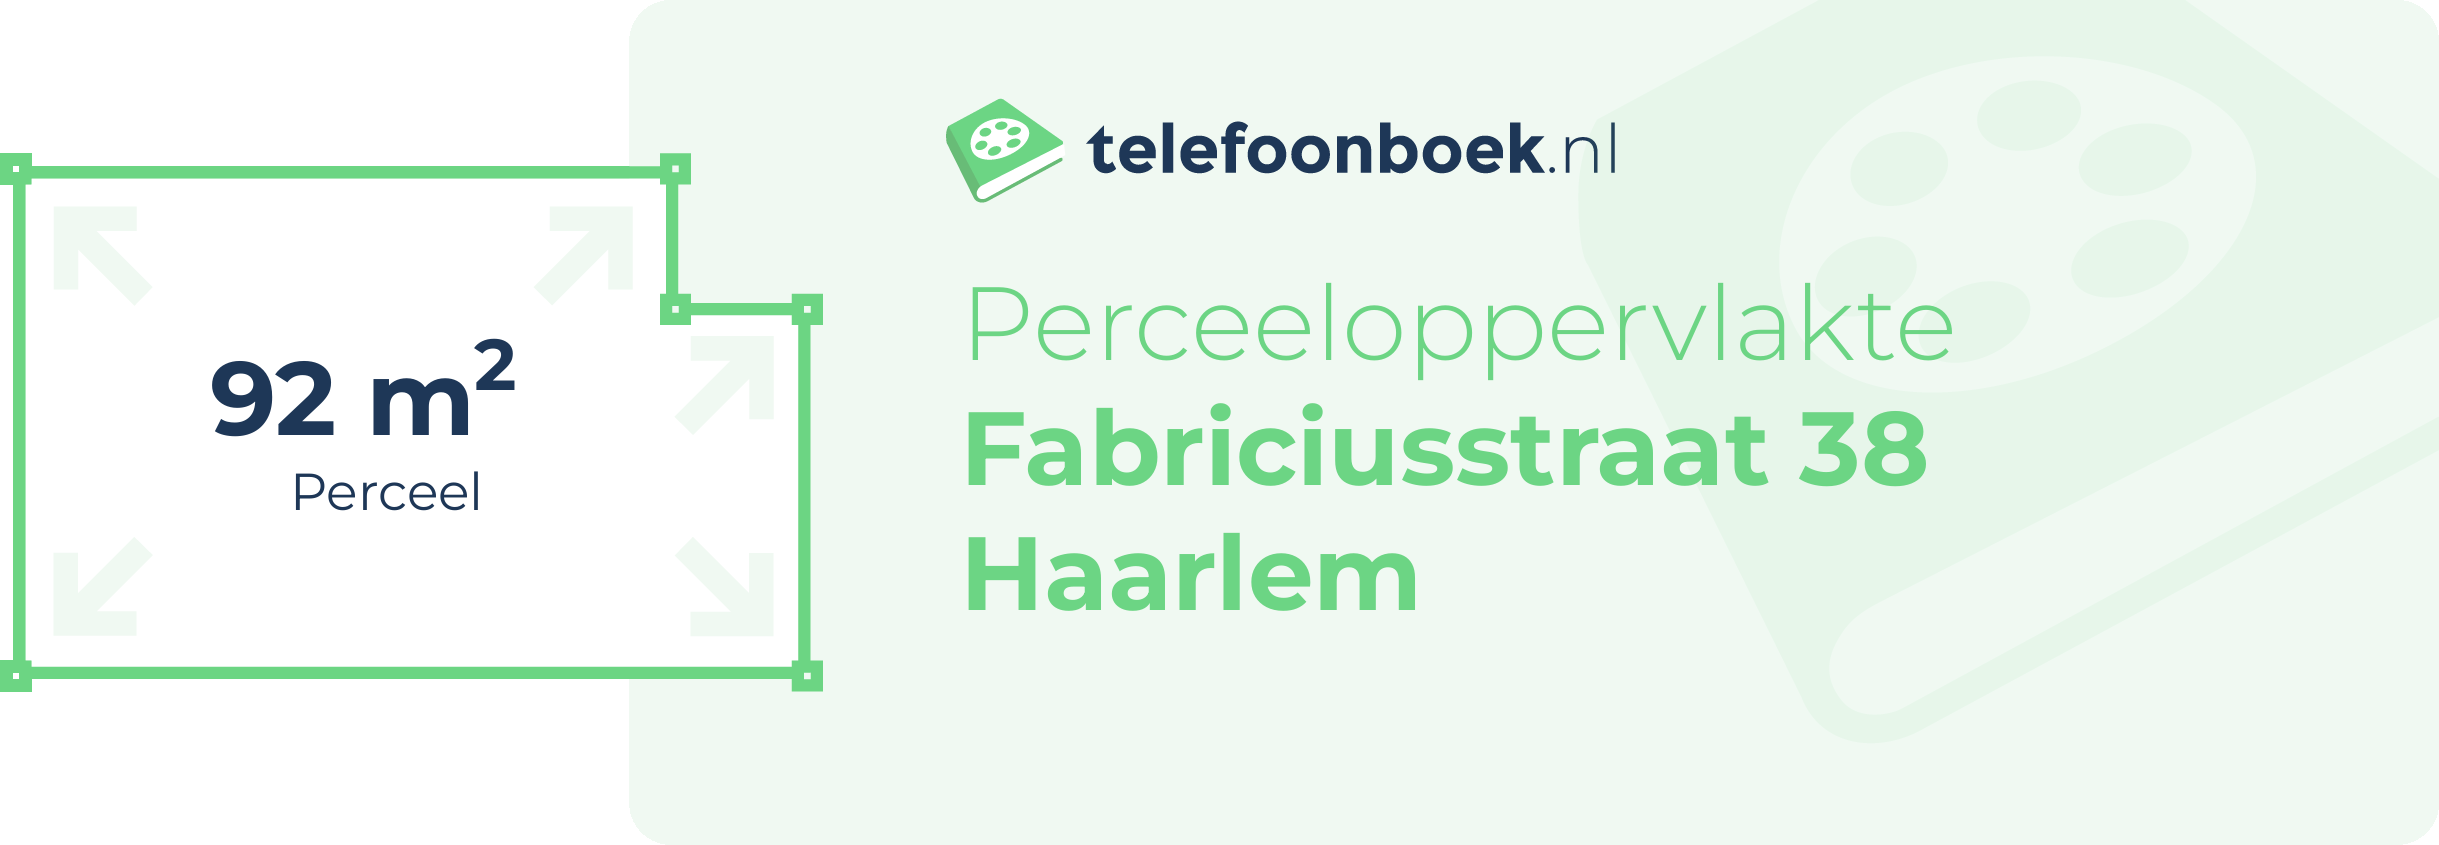 Perceeloppervlakte Fabriciusstraat 38 Haarlem